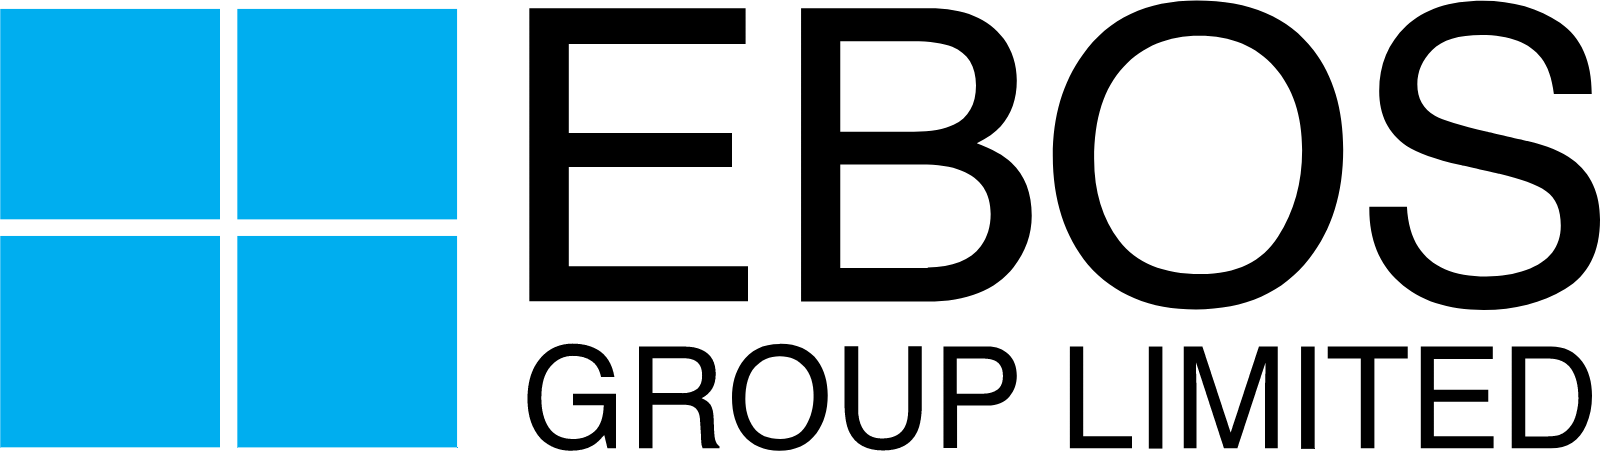 Ebos Group logo large (transparent PNG)